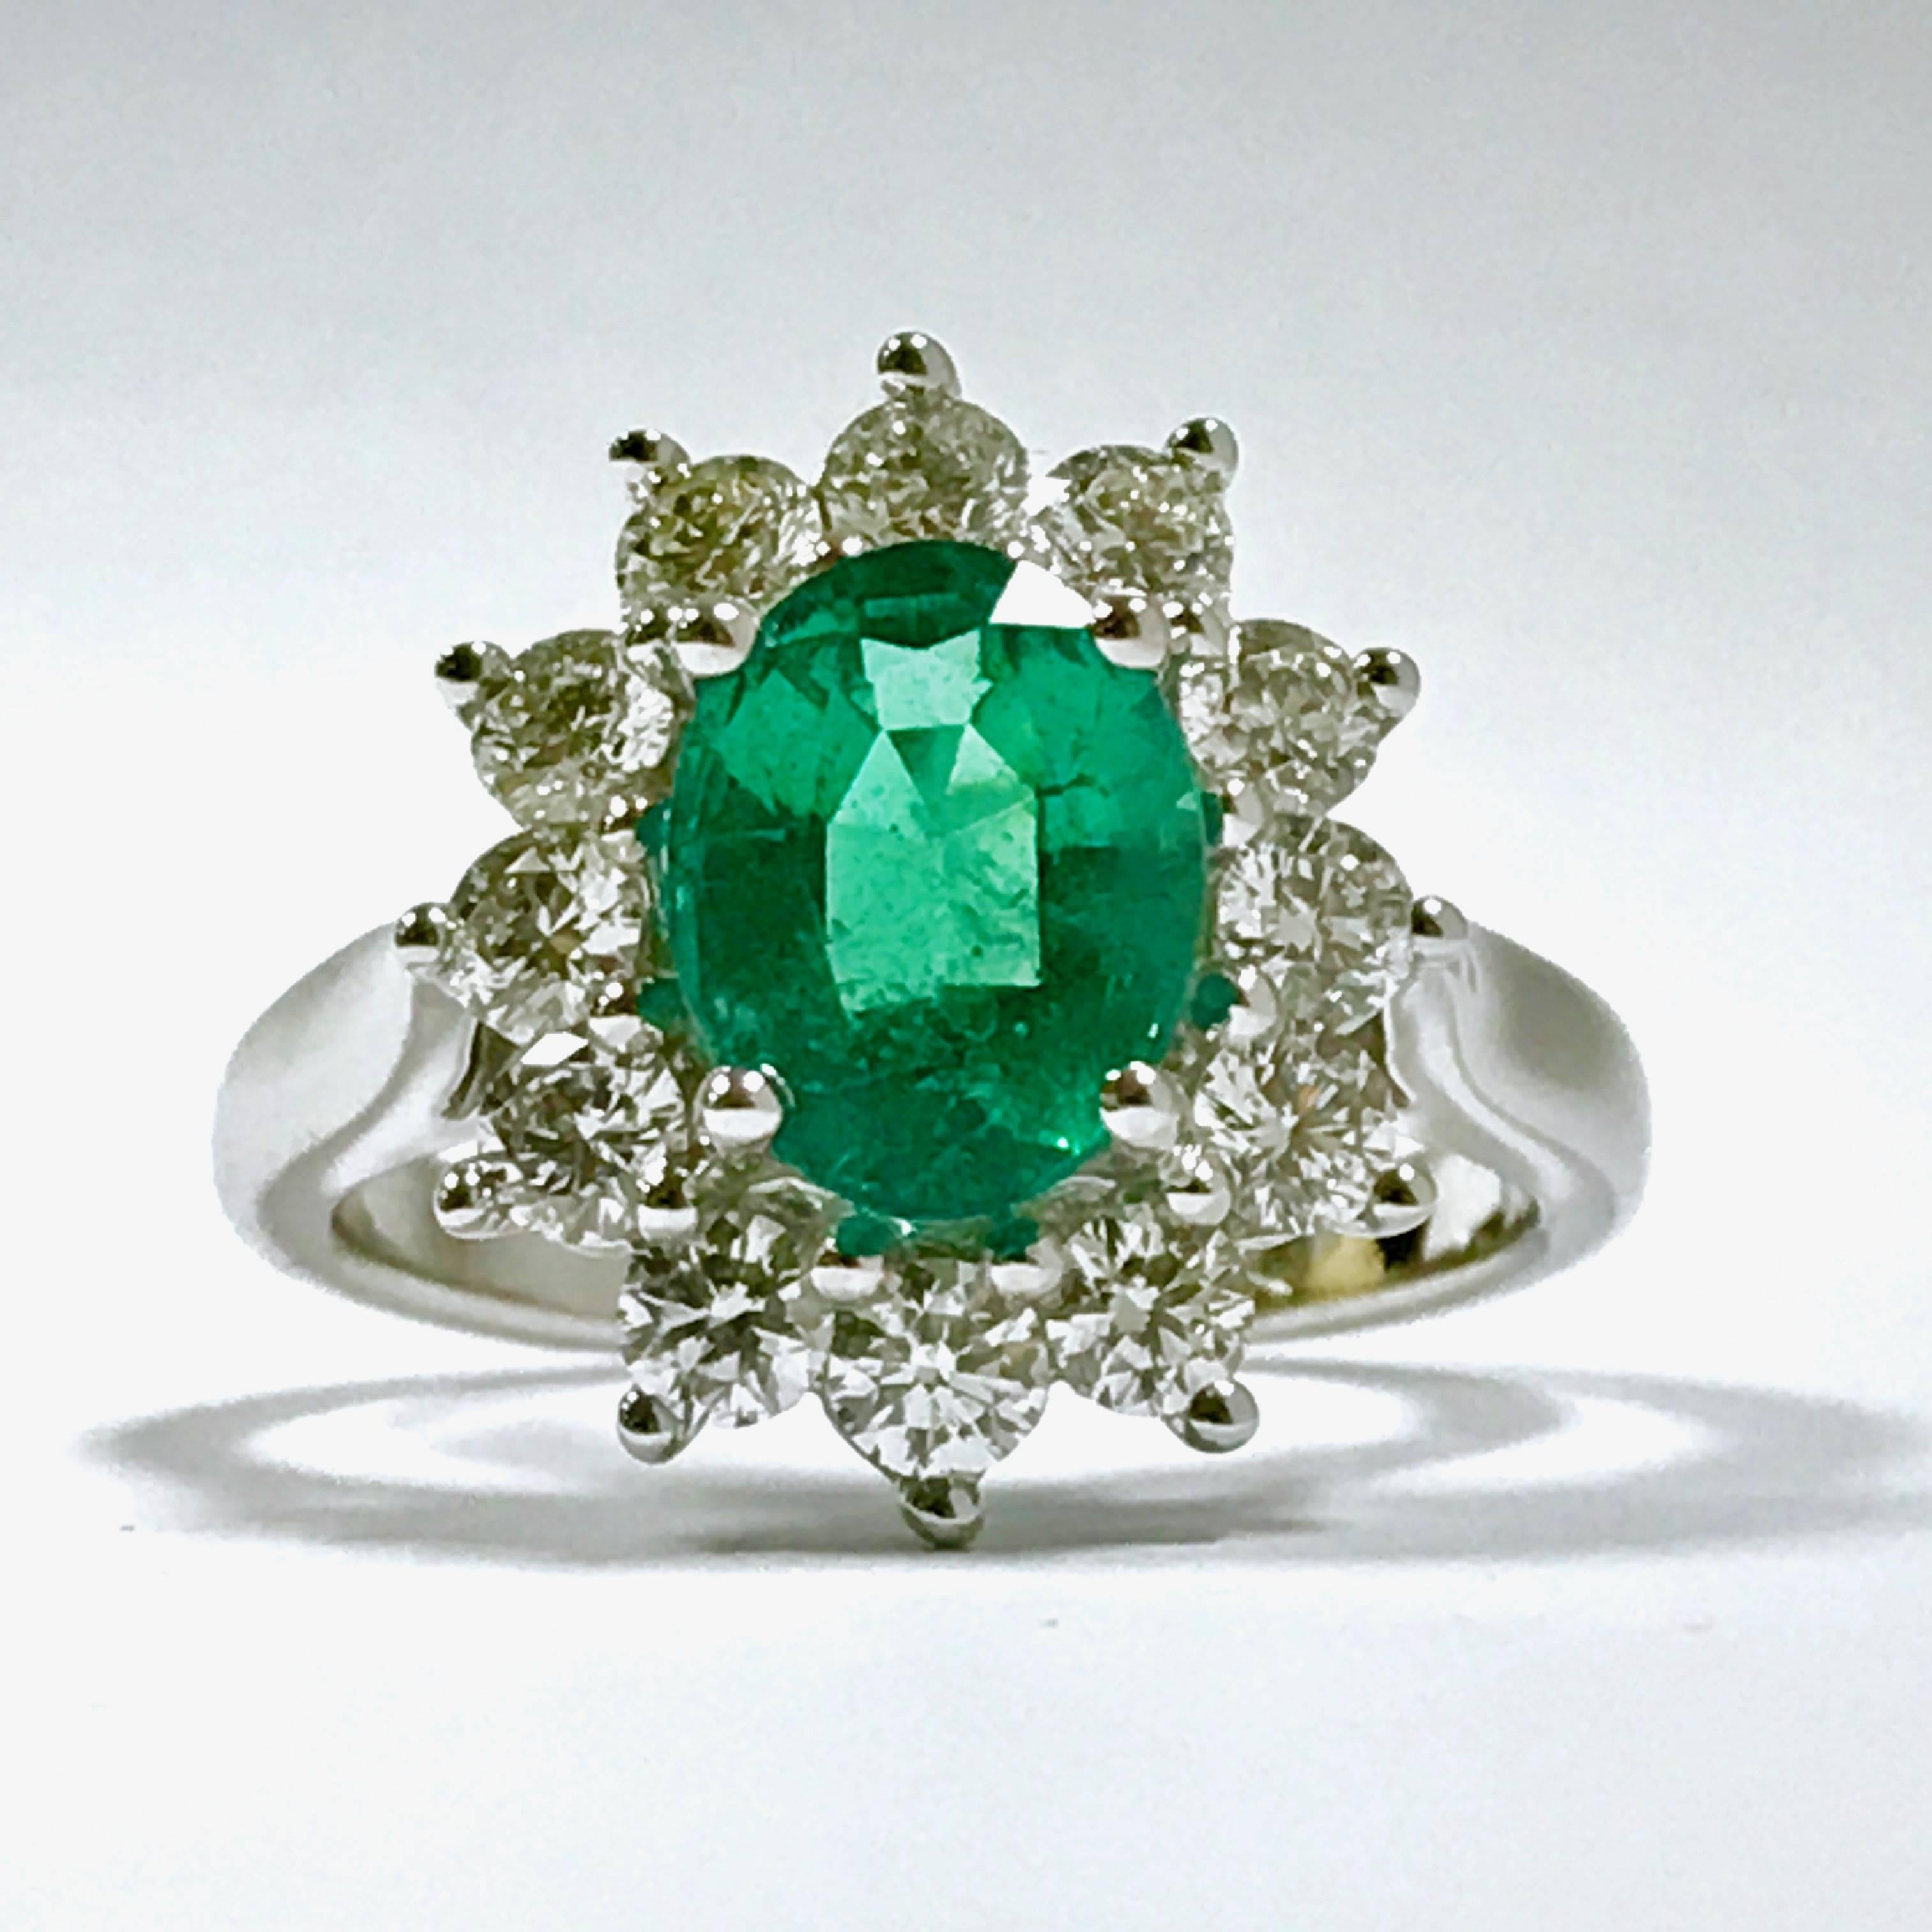 Wonderfull Emerald 2 Carat and Diamonds White Gold Ring.
Emerald 2 Carat
12 Diamonds 1,09 Carat
White Gold 18 Carat 
Size 54